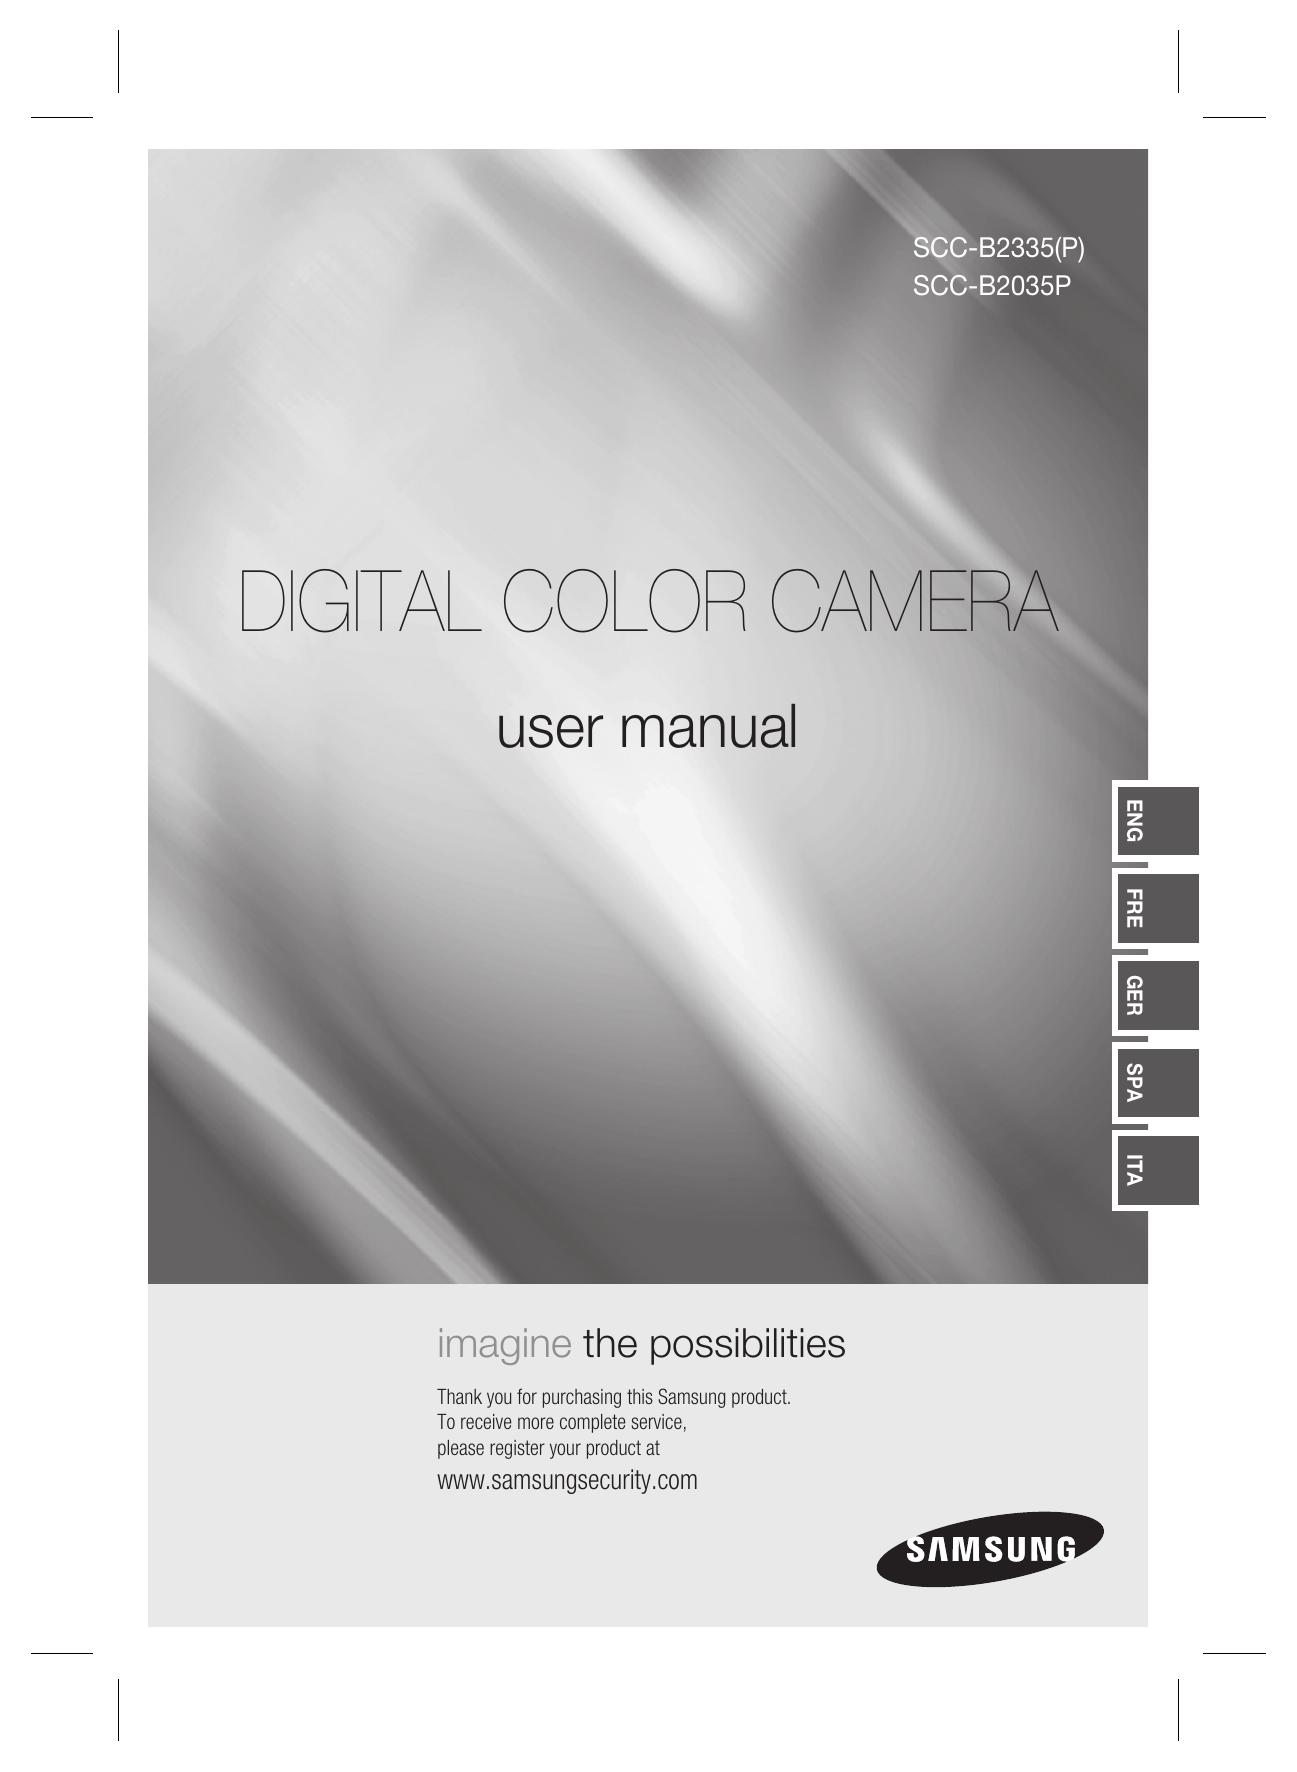 Samsung SCC-B2335 Security Camera User Manual